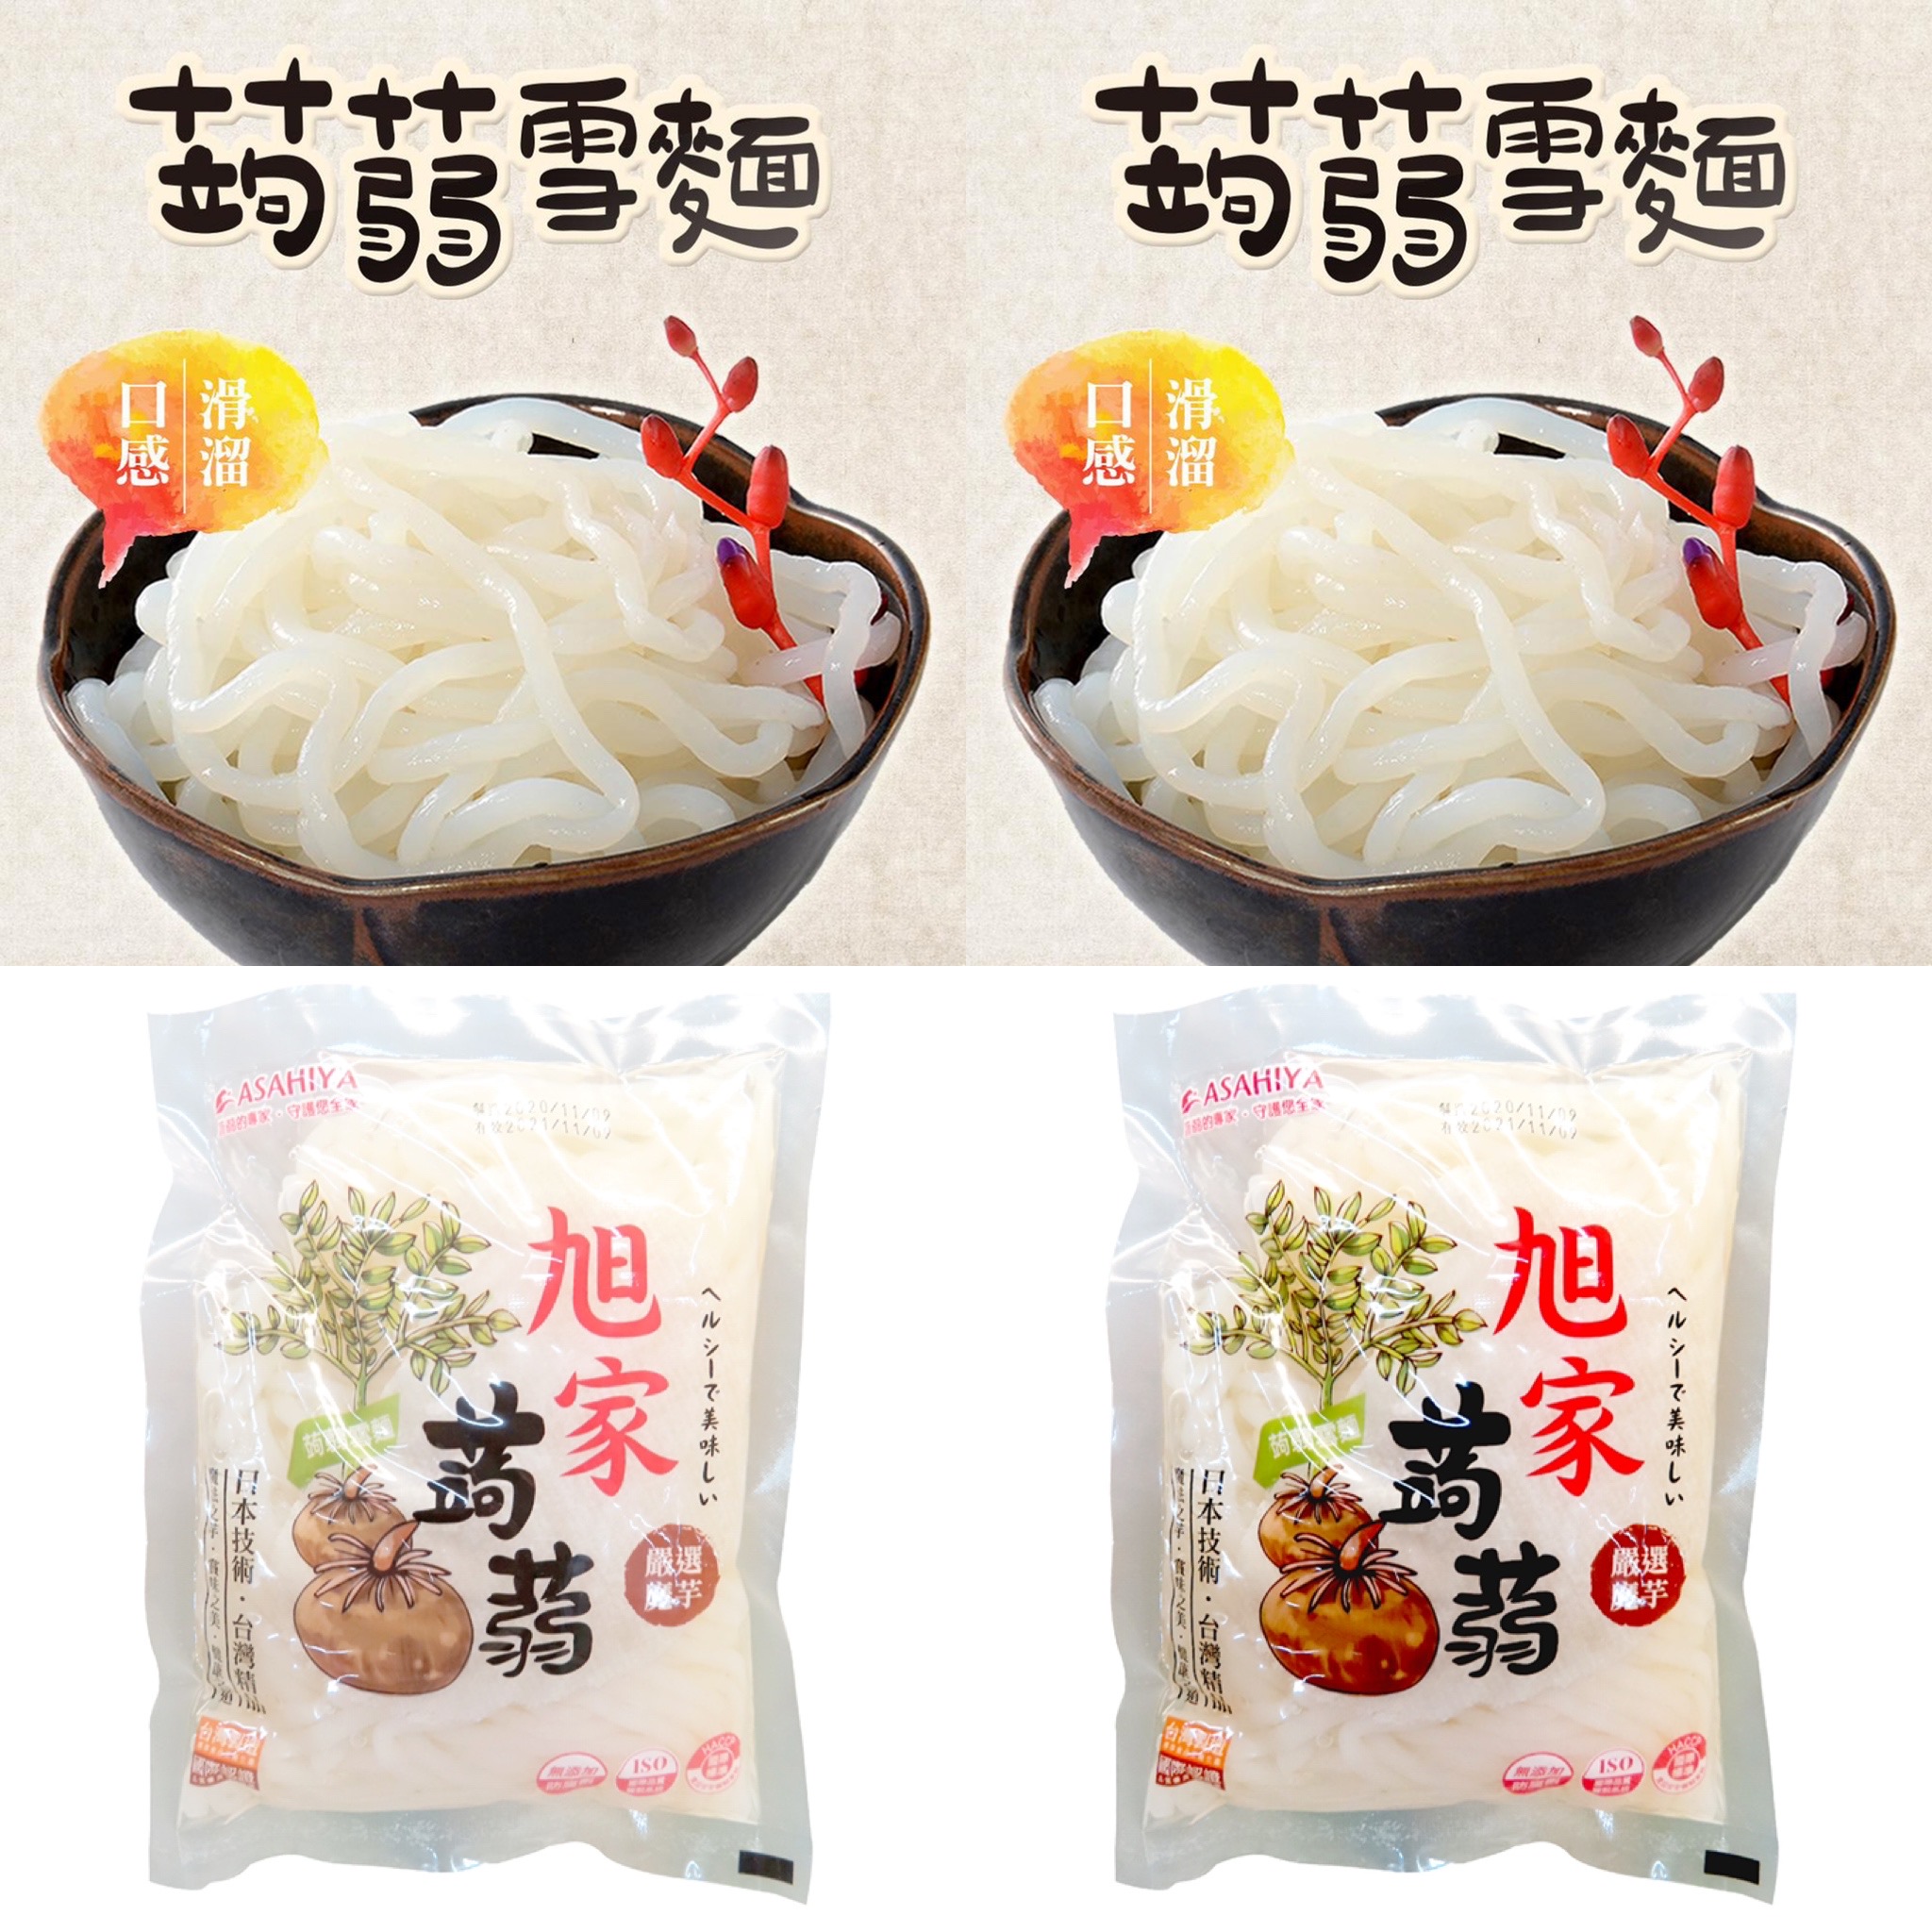 Image Bundle of 6 Konjac Noodles 零负担面组 - 蒟蒻雪面 3包 + 蒟蒻春面 3包